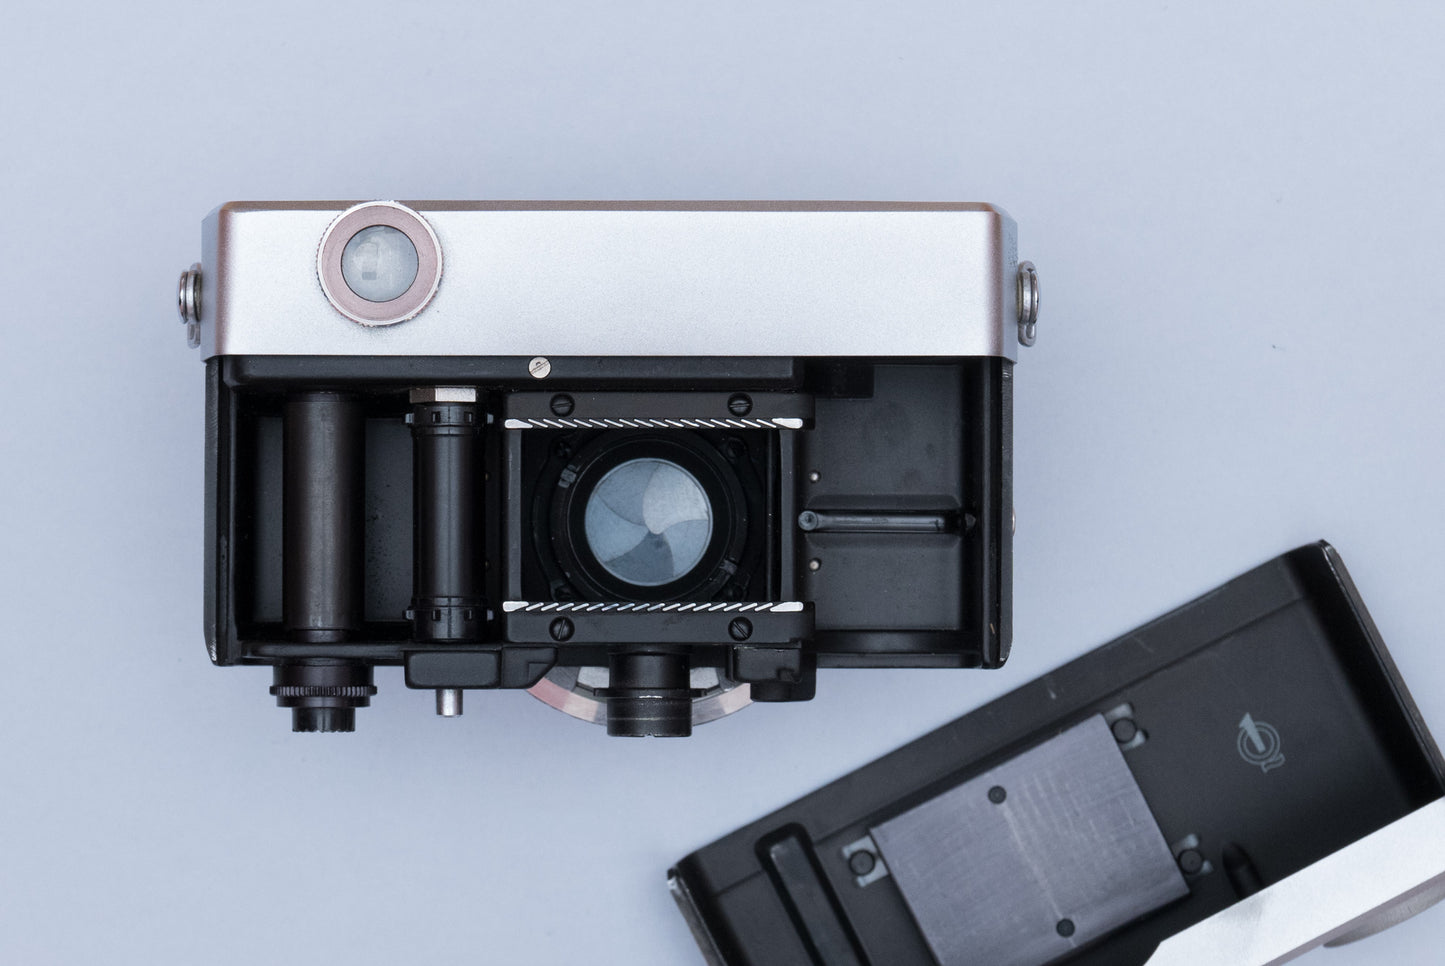 Werra IV Black Rangefinder 35mm Film Camera with Carl Zeiss Tessar lens